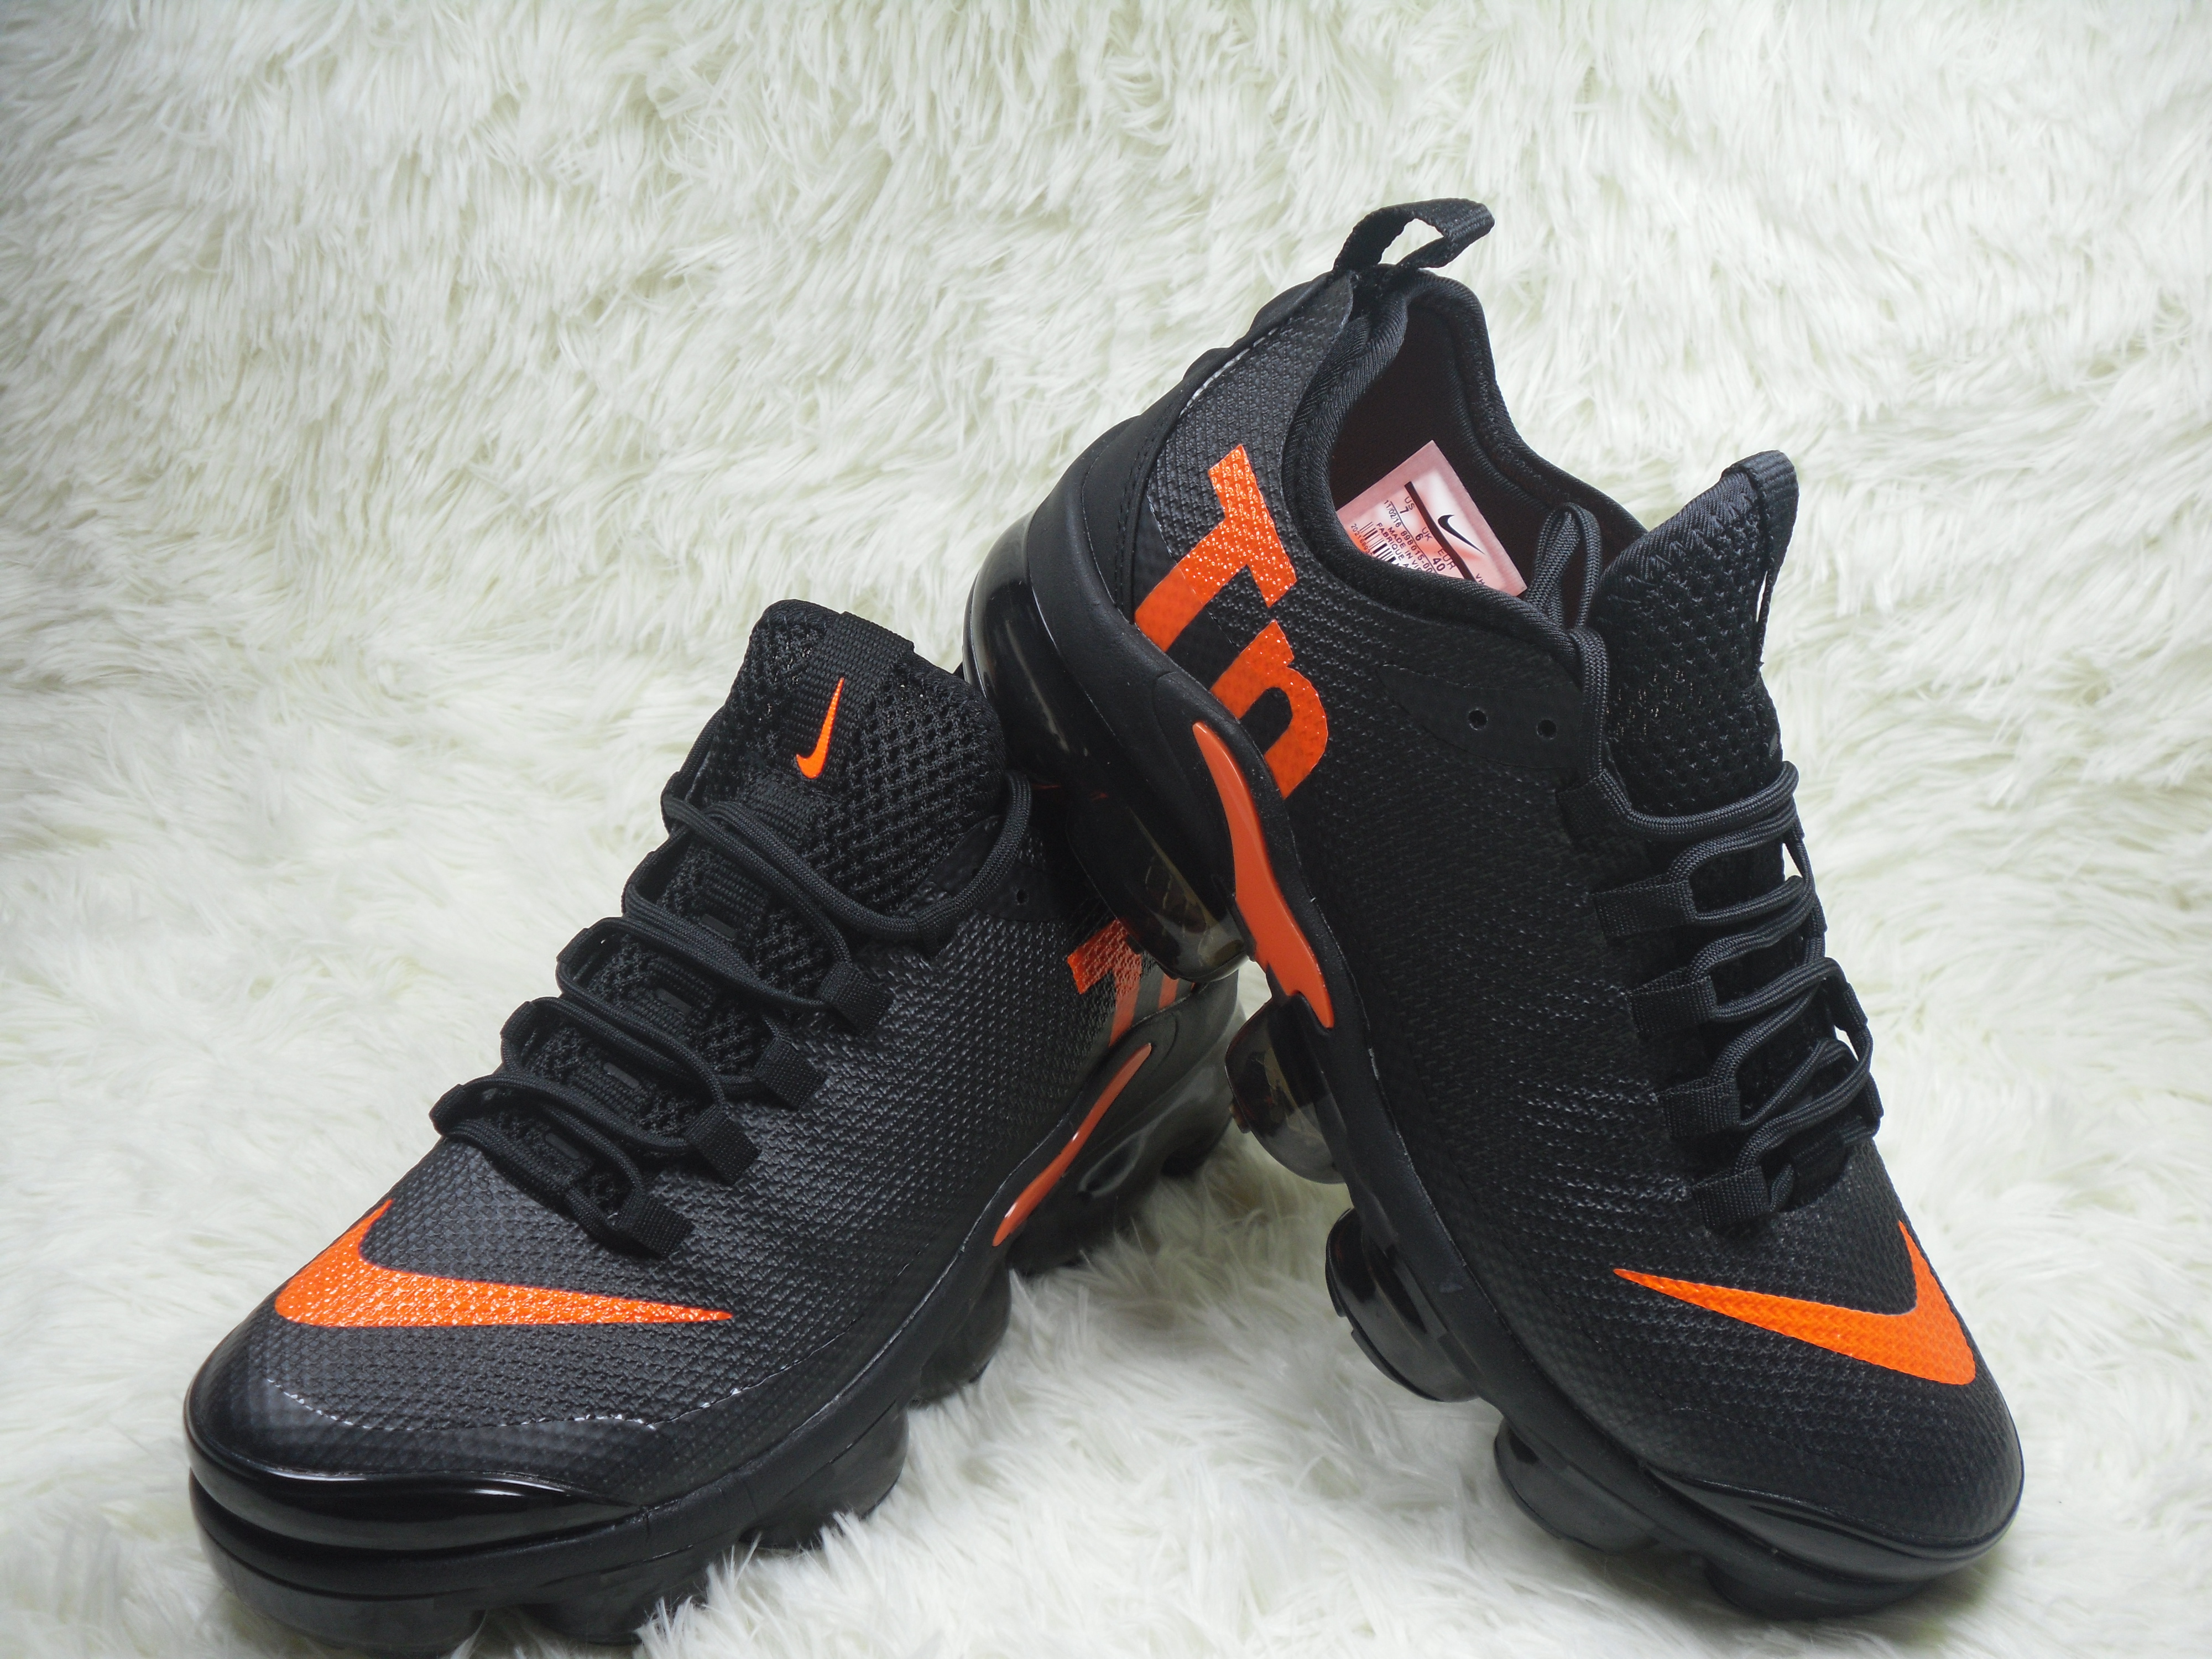 Nike Air Max Plus TN Summer Black Orange Shoes